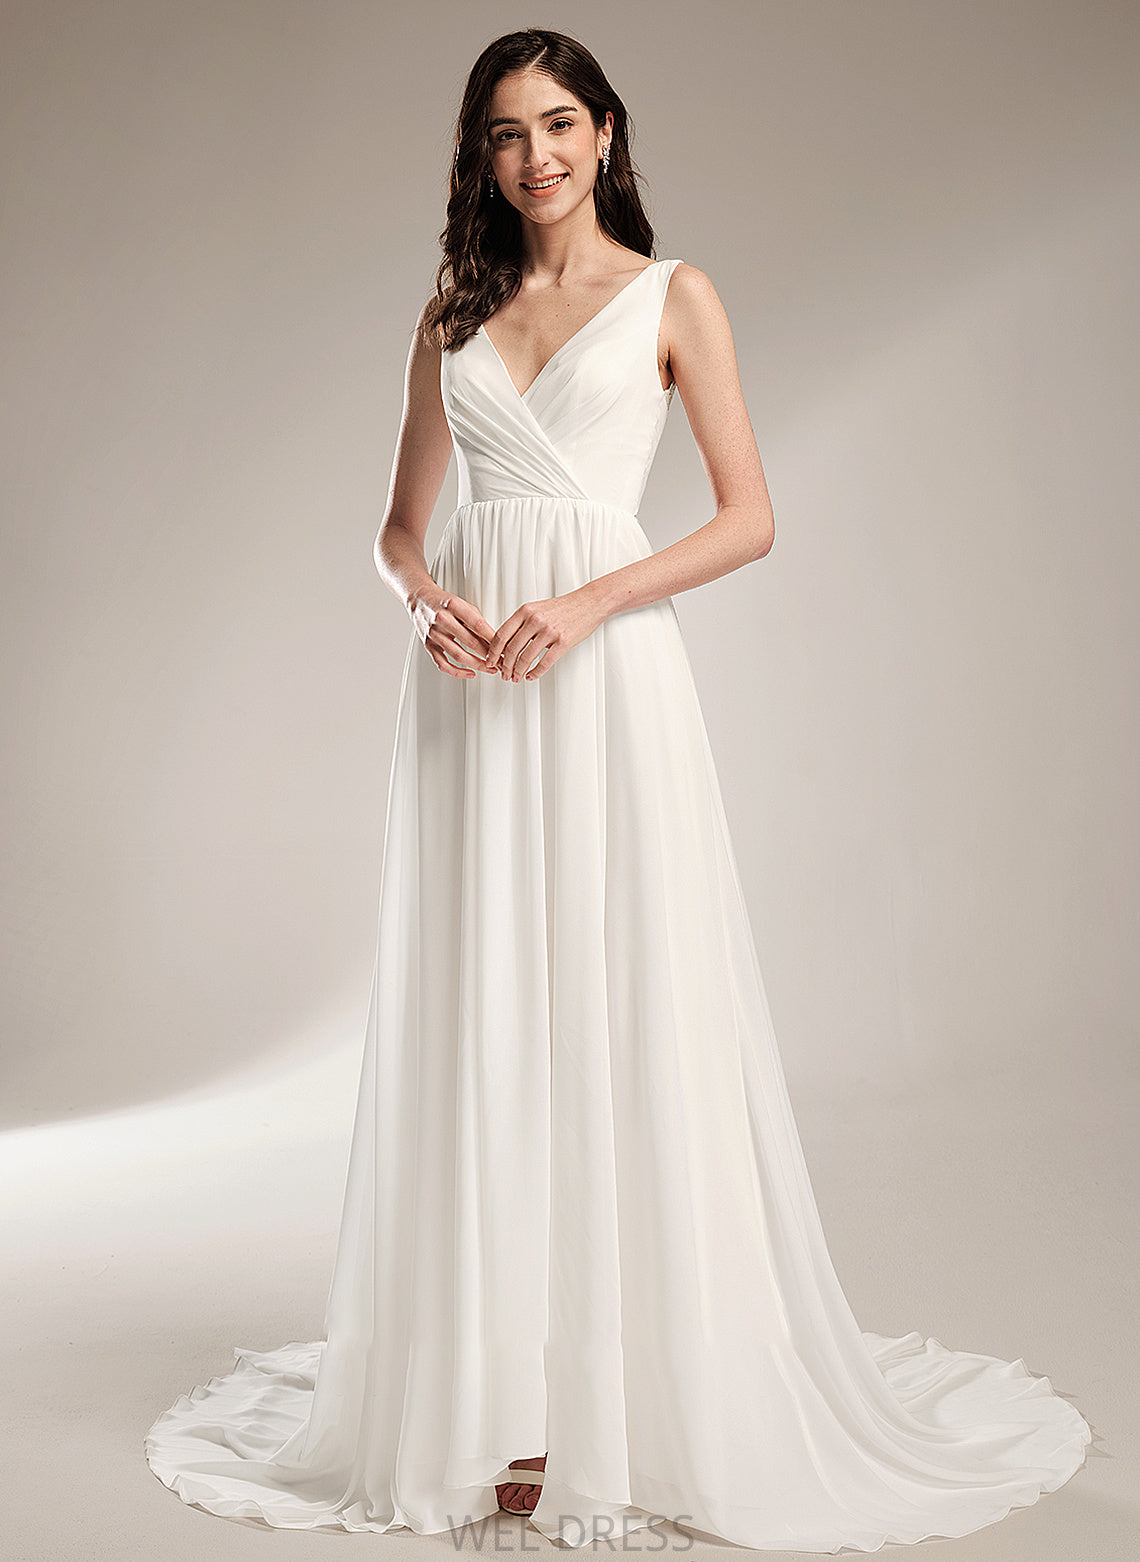 With Tianna V-neck Wedding Dresses Lace Wedding Court Train A-Line Dress